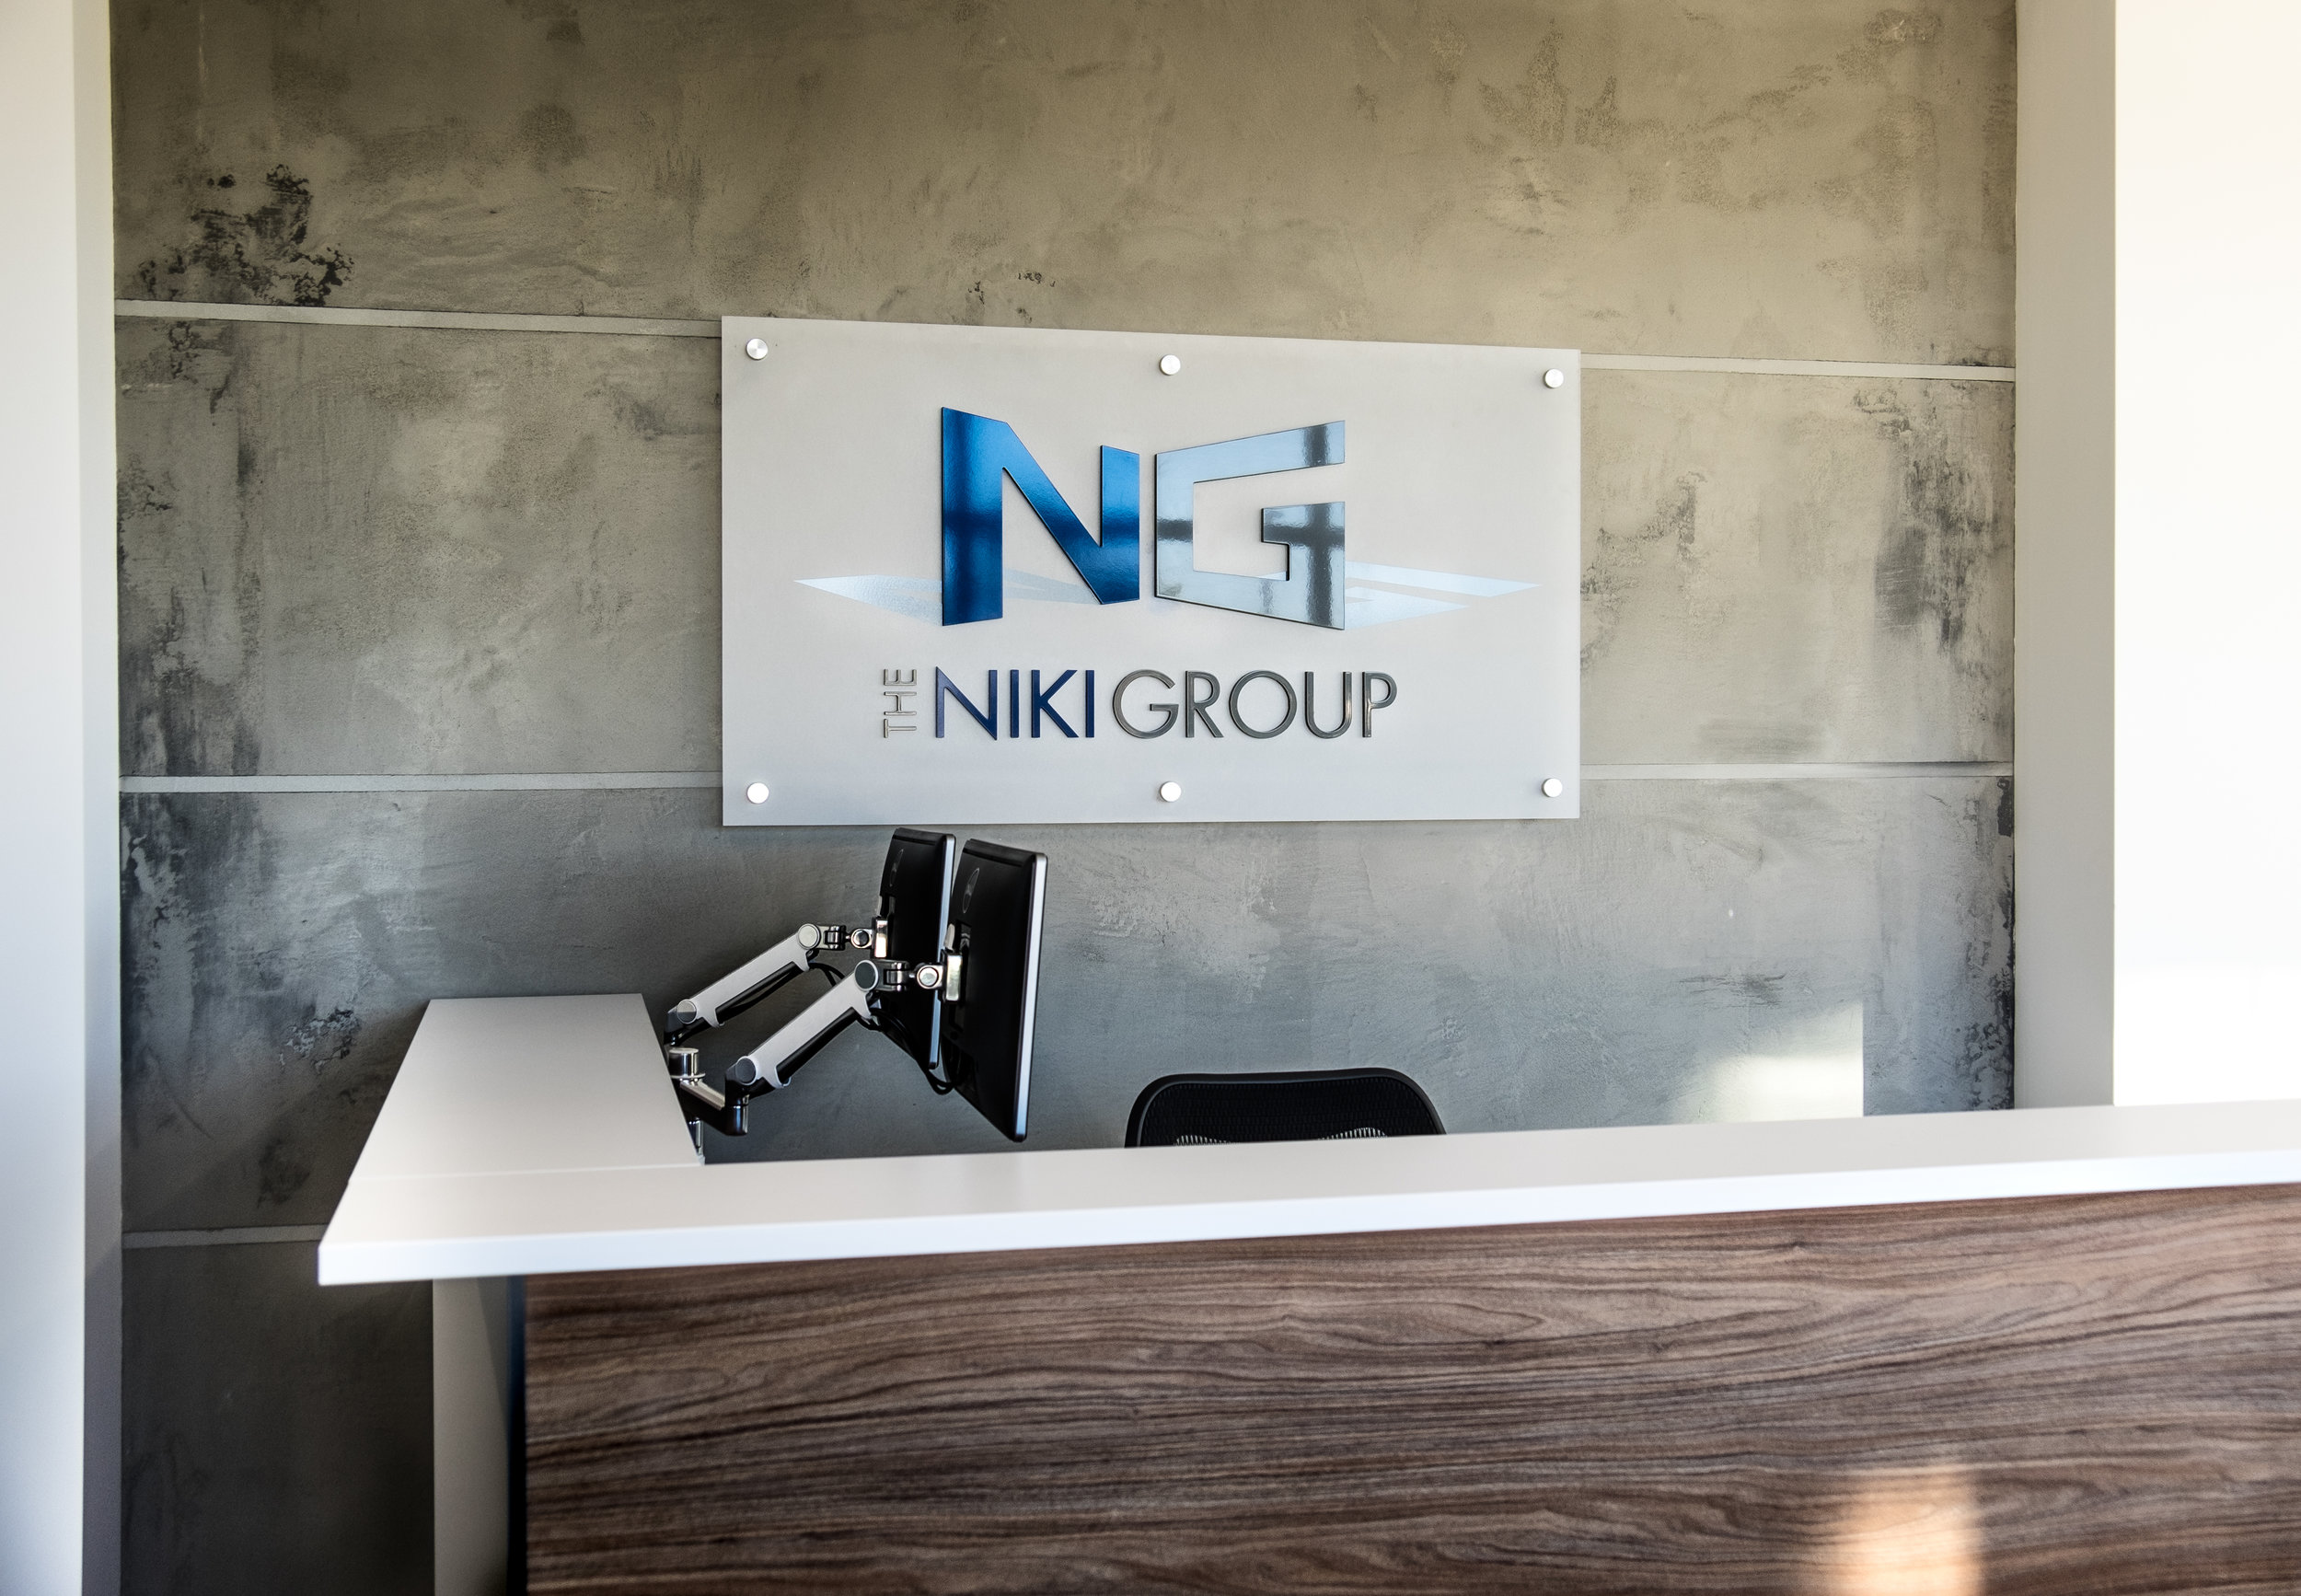 The Niki Group